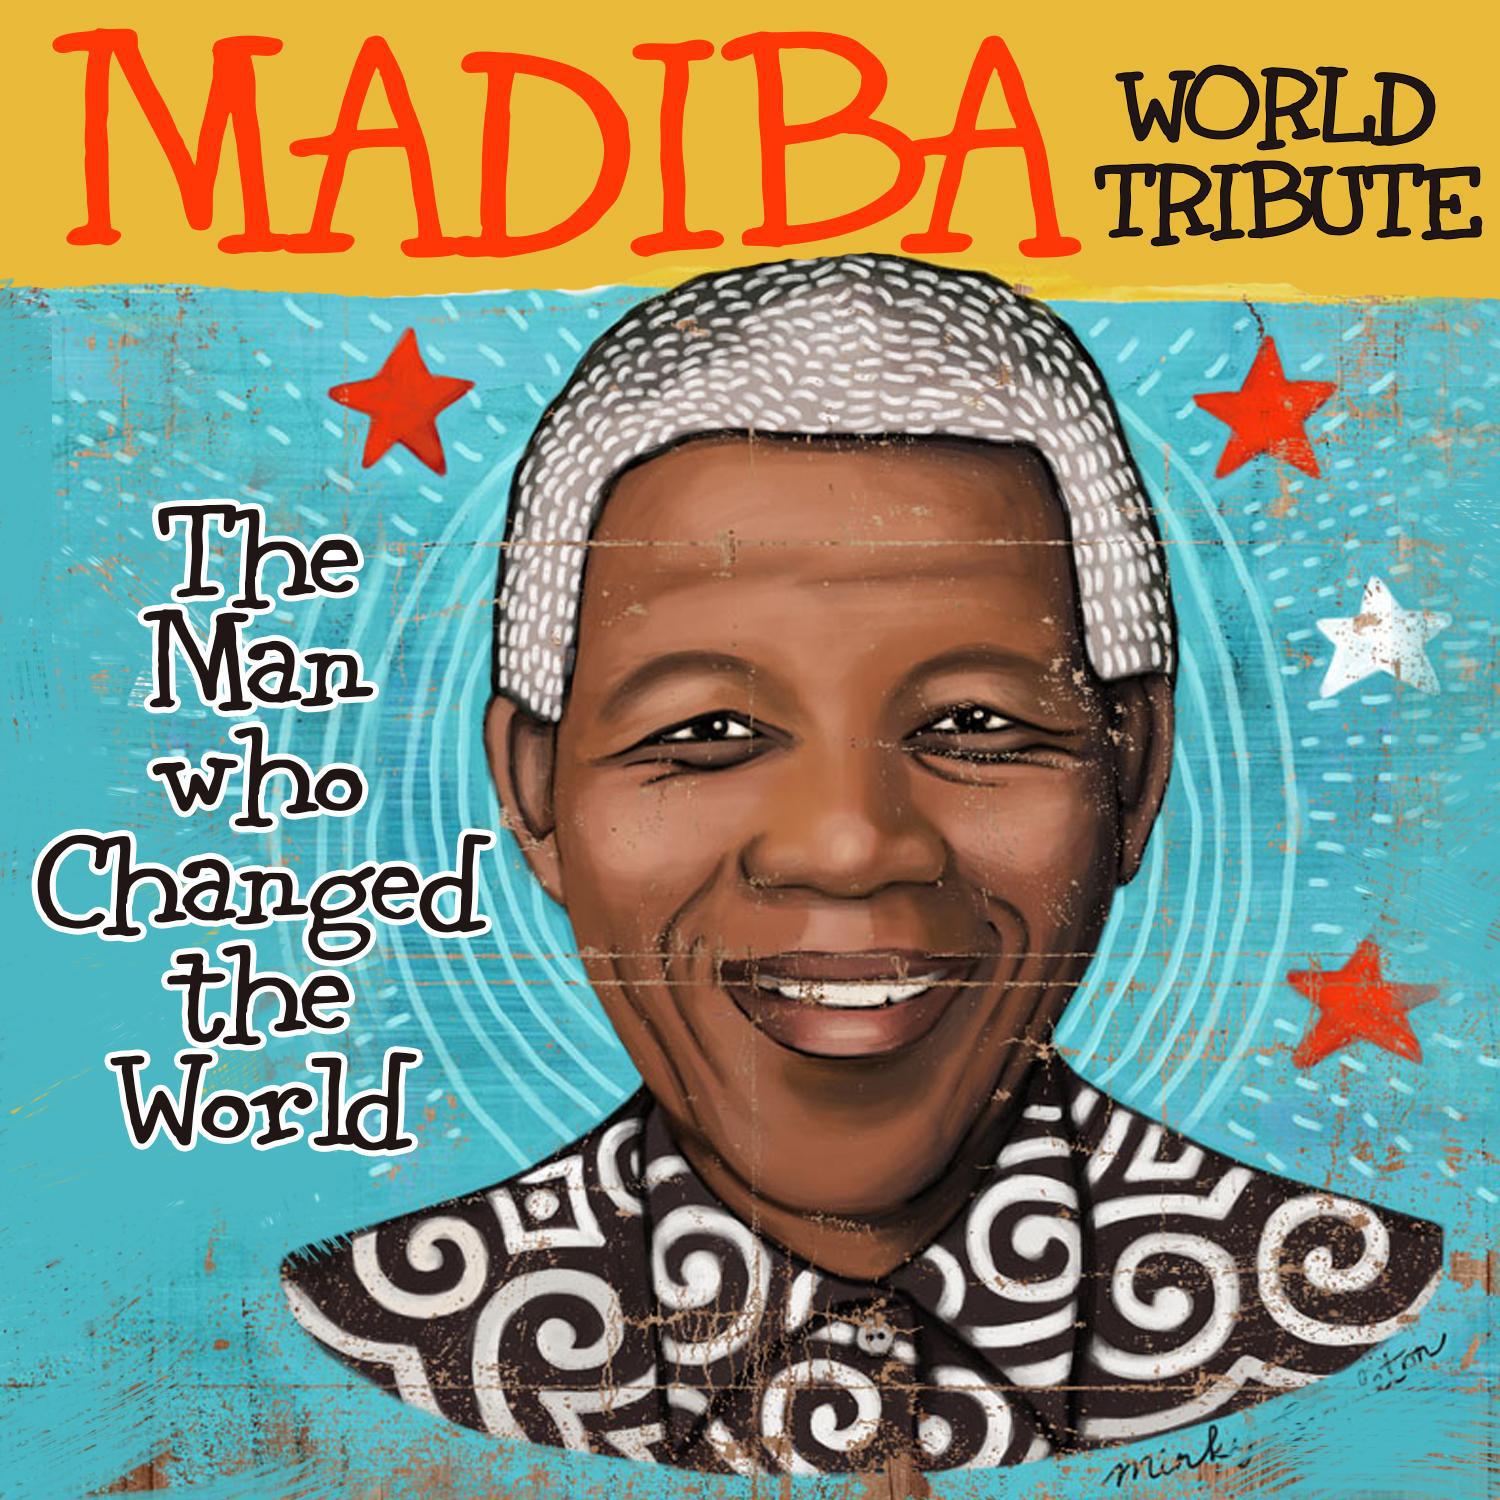 Nelson Mandela: The Man Who Changed The World (Madiba World Tribute)